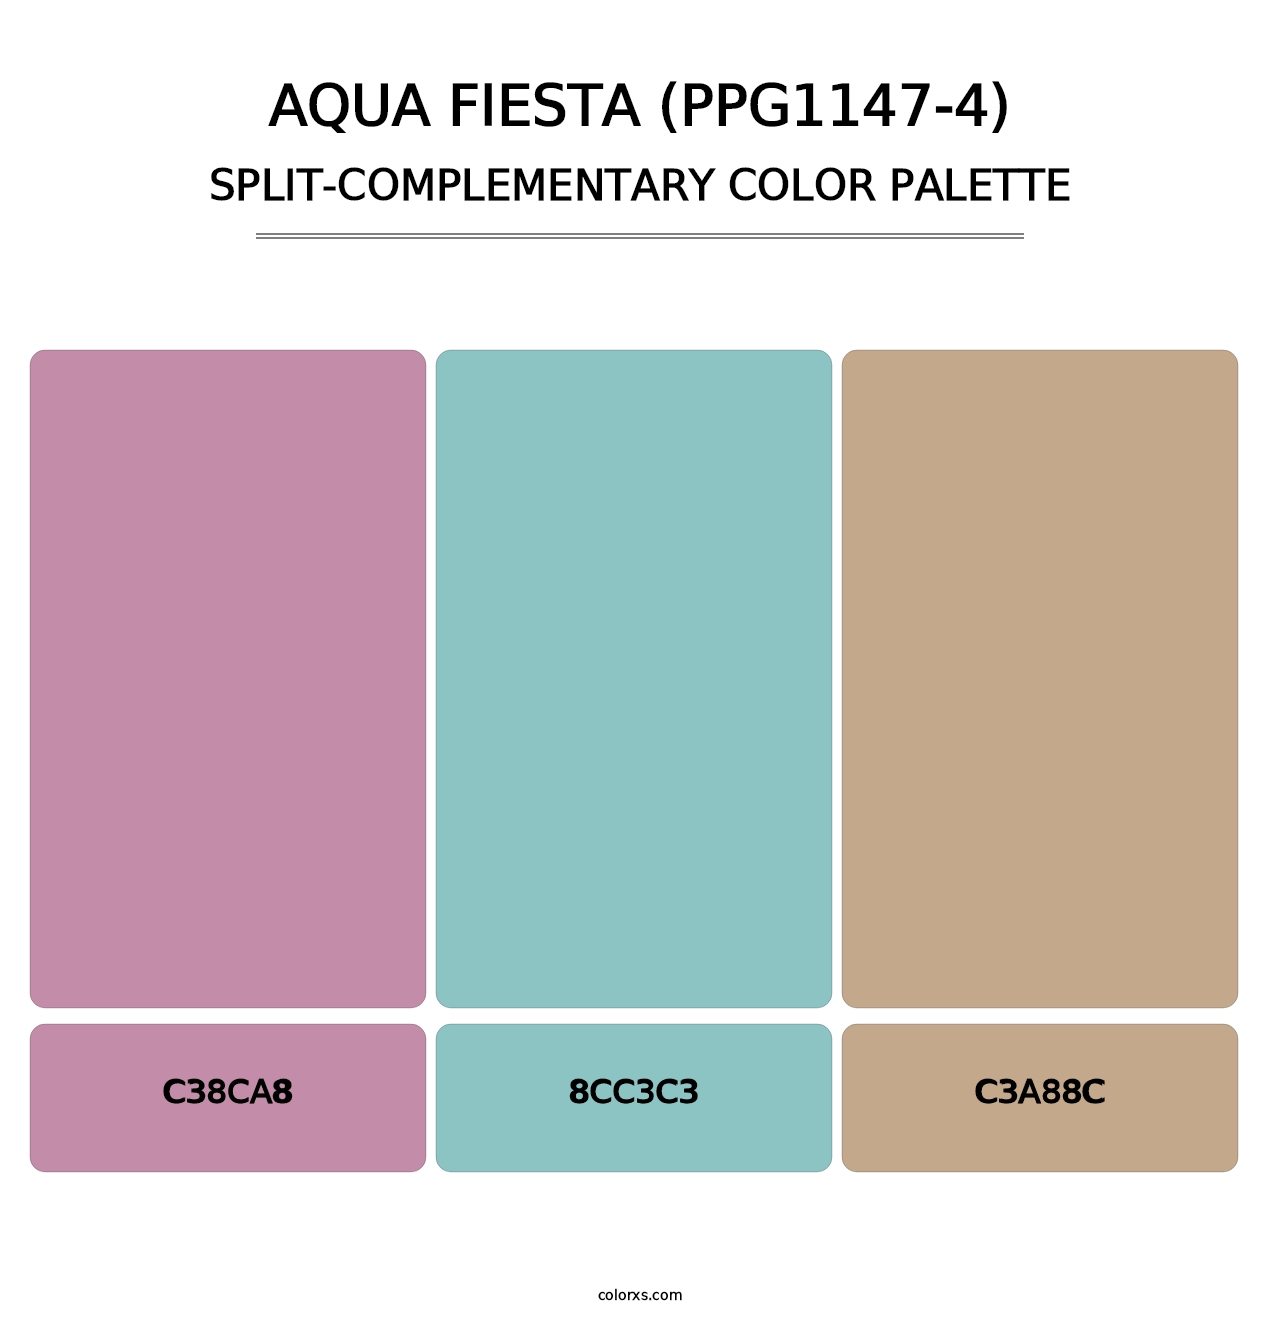 Aqua Fiesta (PPG1147-4) - Split-Complementary Color Palette